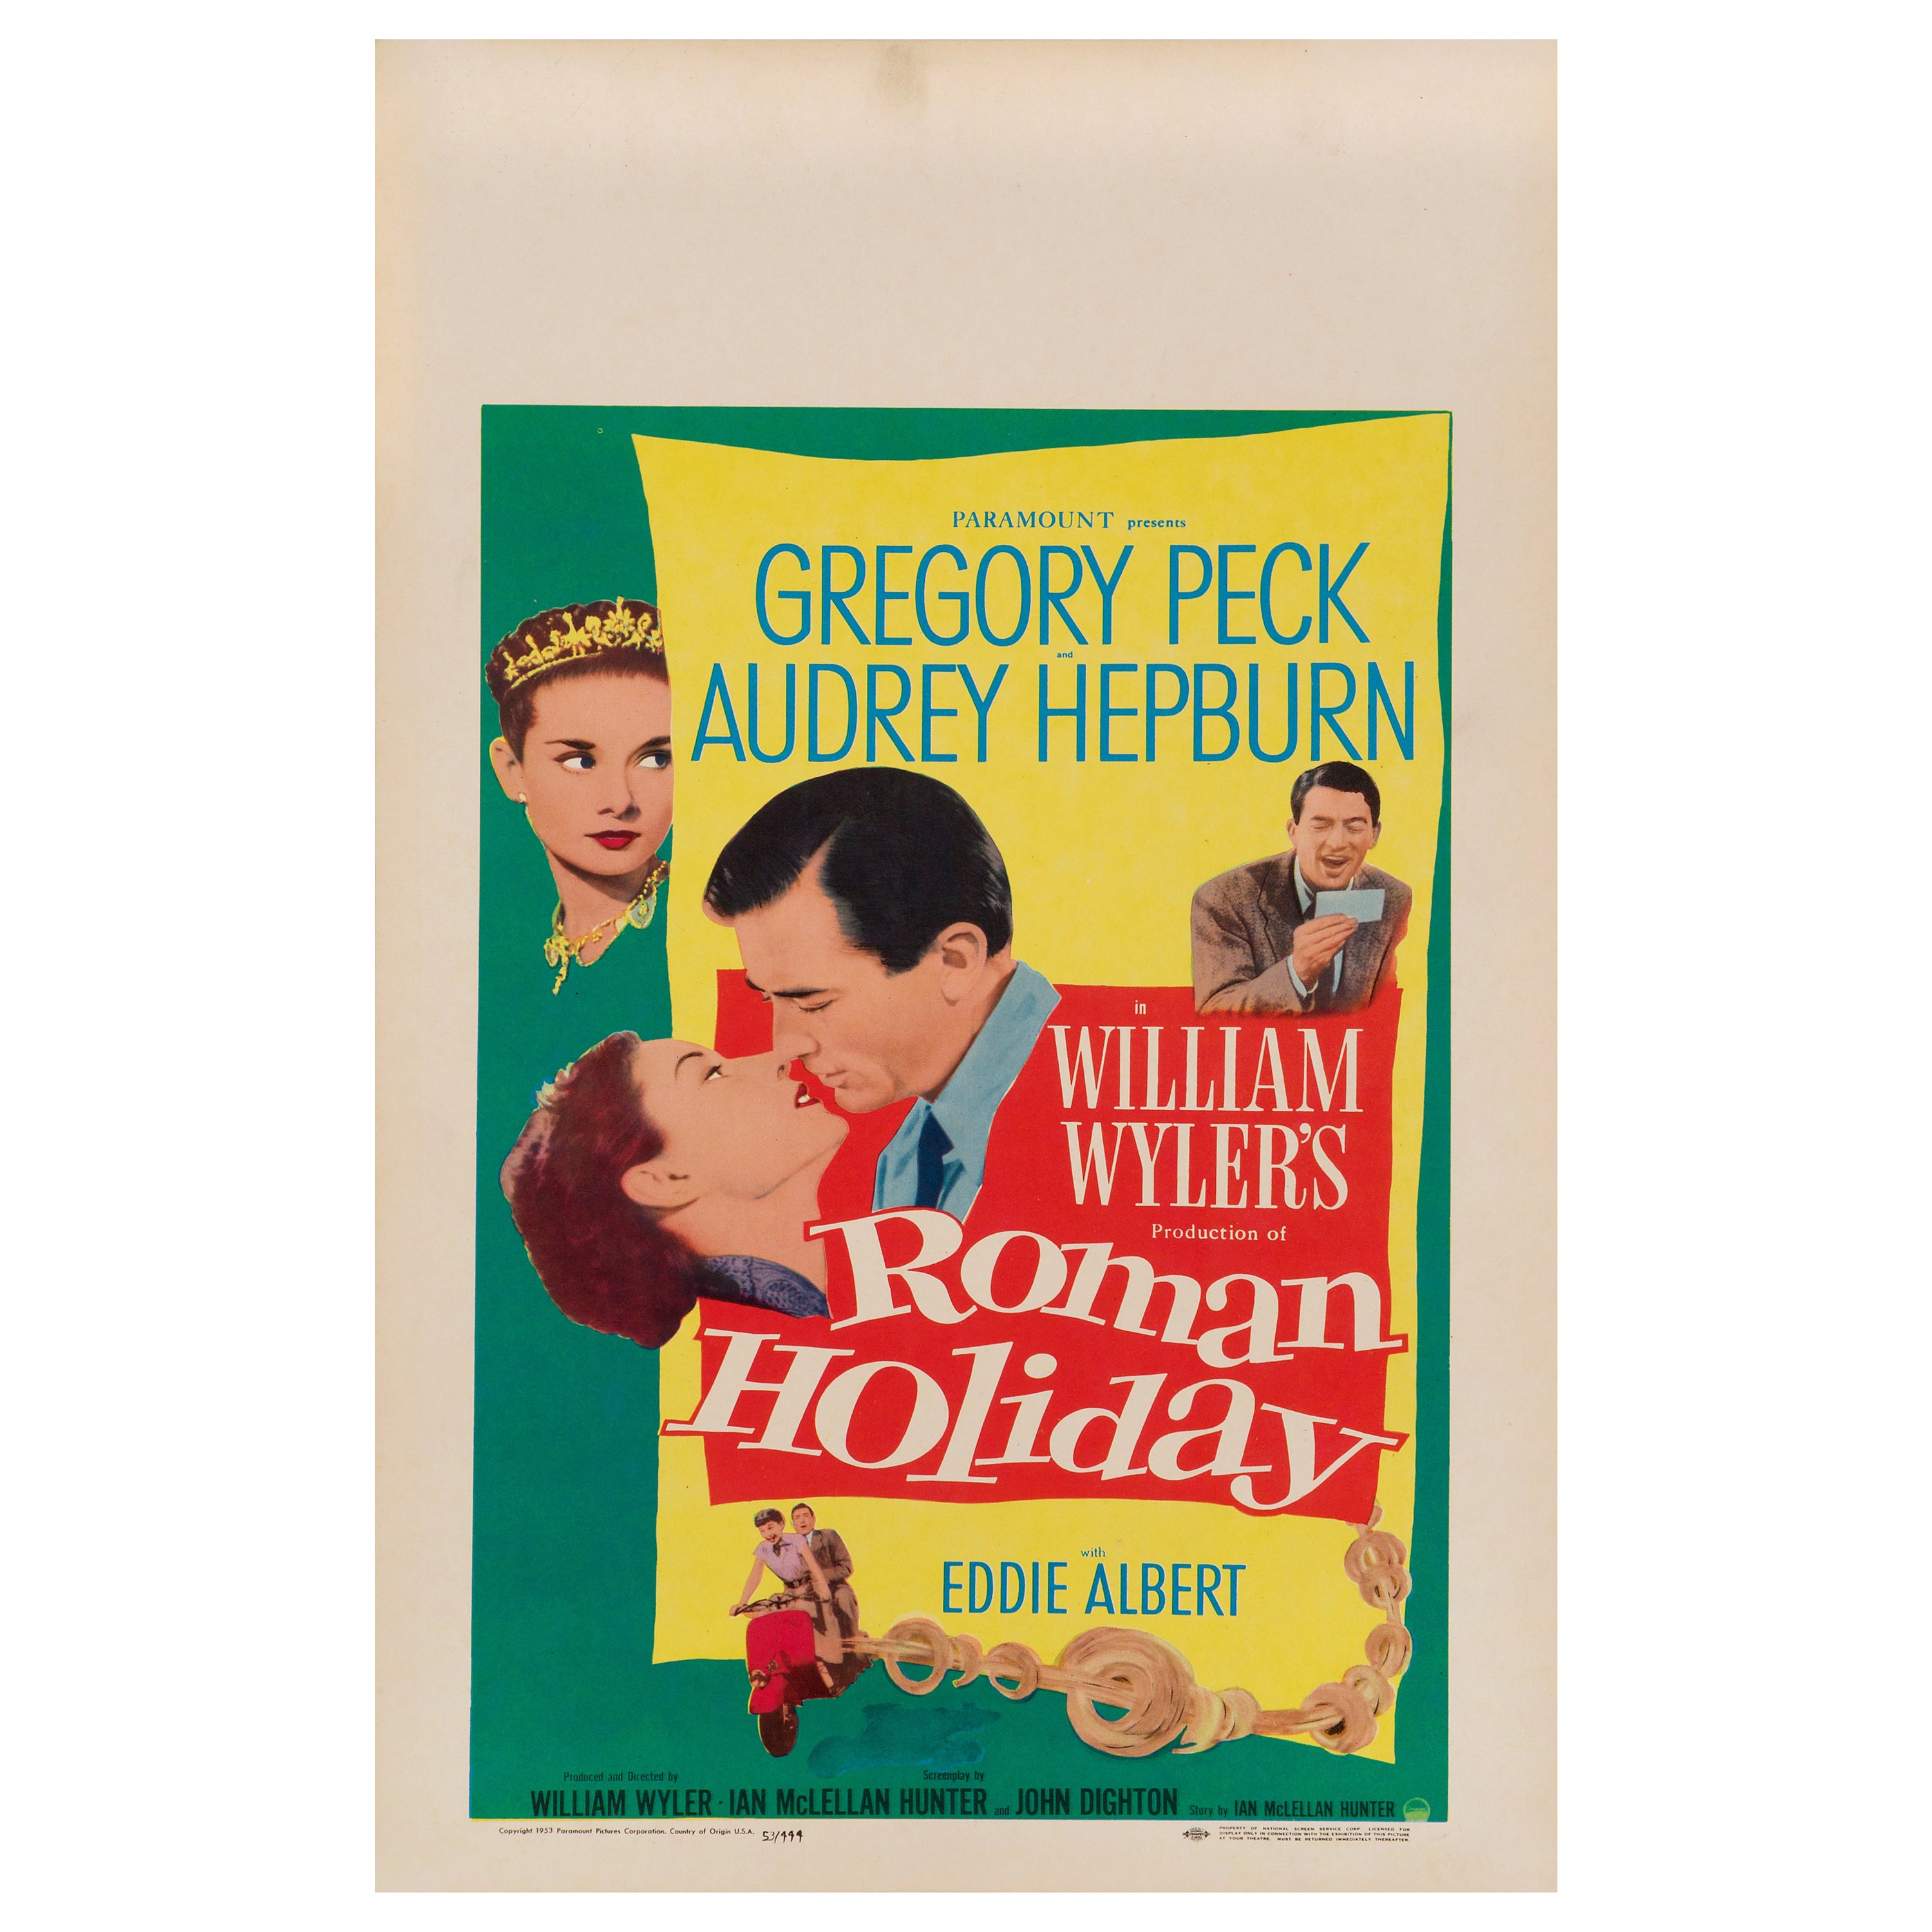 Audrey Hepburn "Roman Holiday" Original Vintage US Movie Poster, 1953